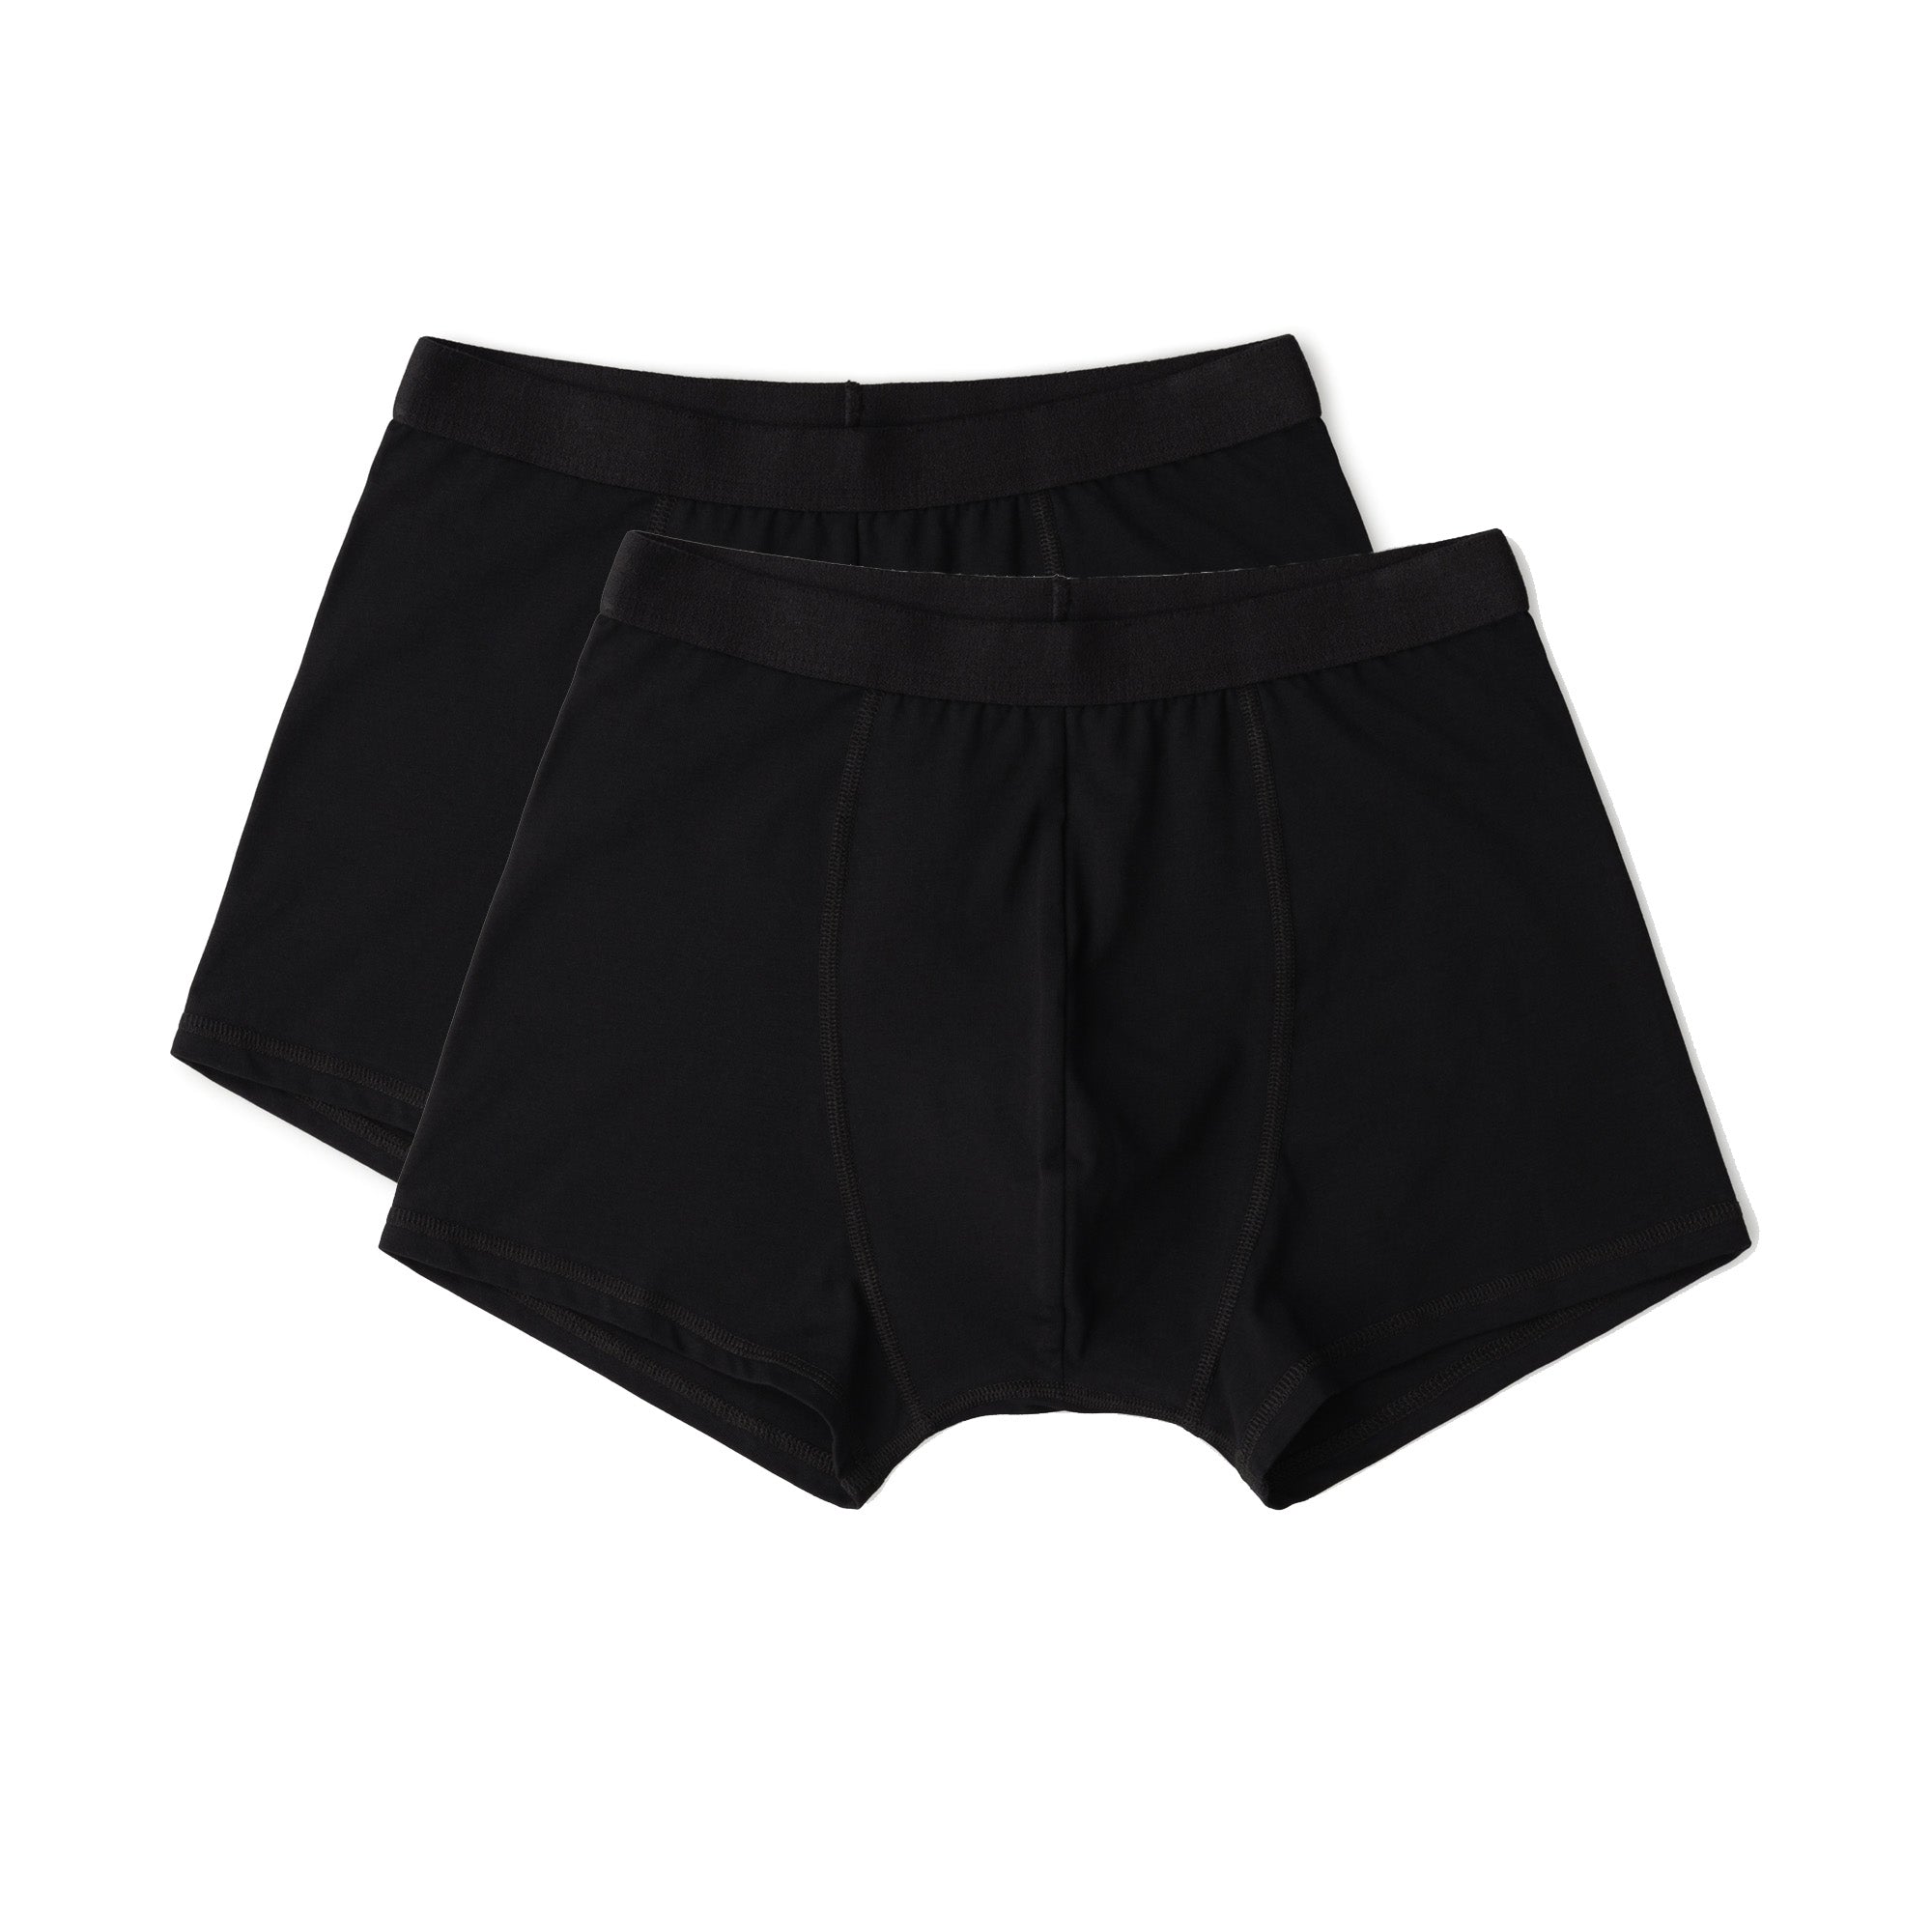   Essentials Men's Cotton Jersey Boxer Short